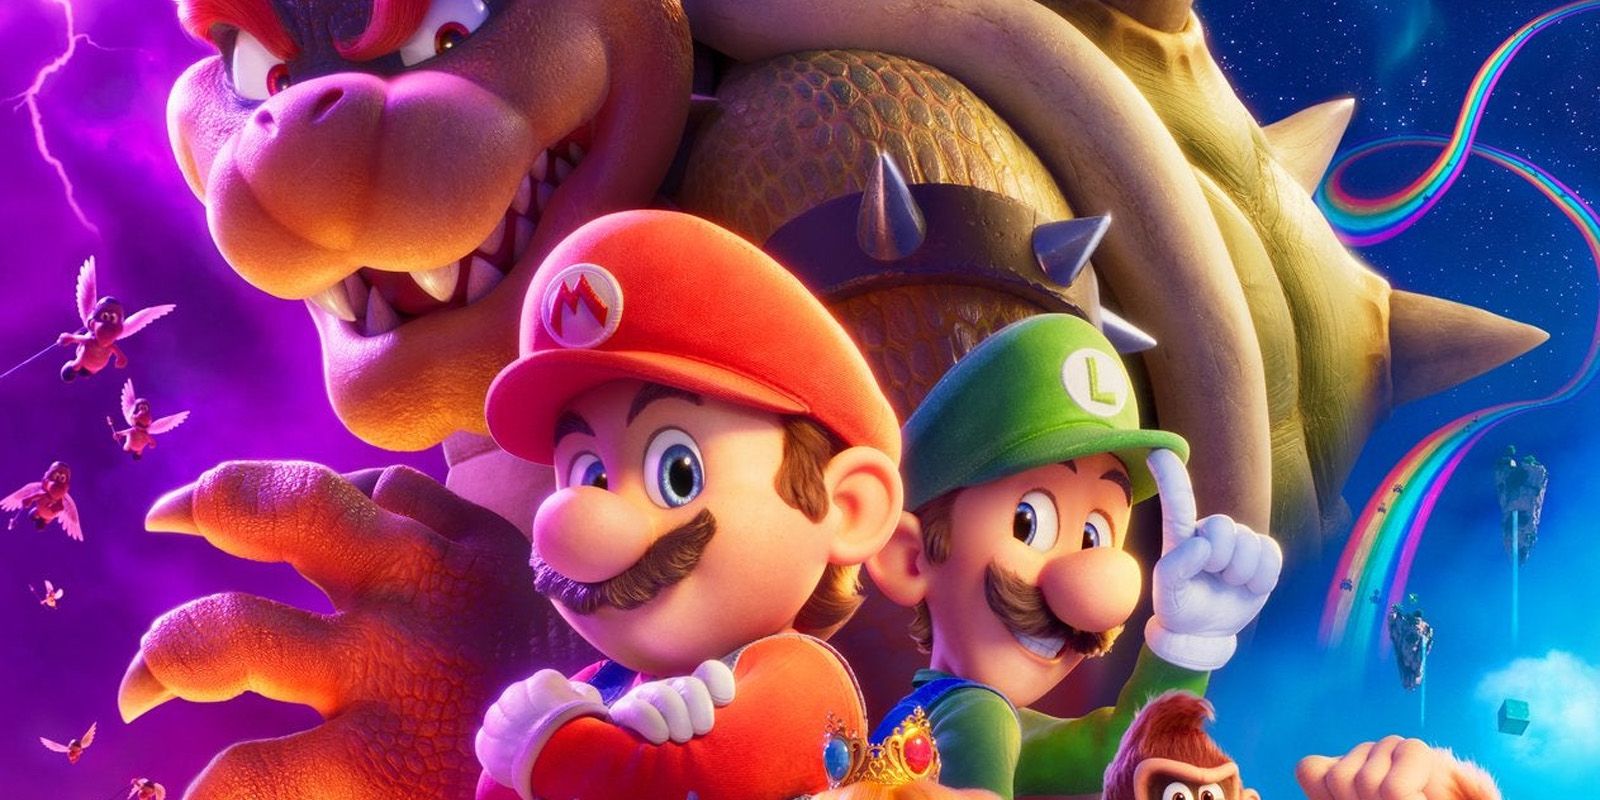 Mario 2: Bowser Rises Back (The Super Mario Bros. Movie sequel; 2025) : r/ Mario